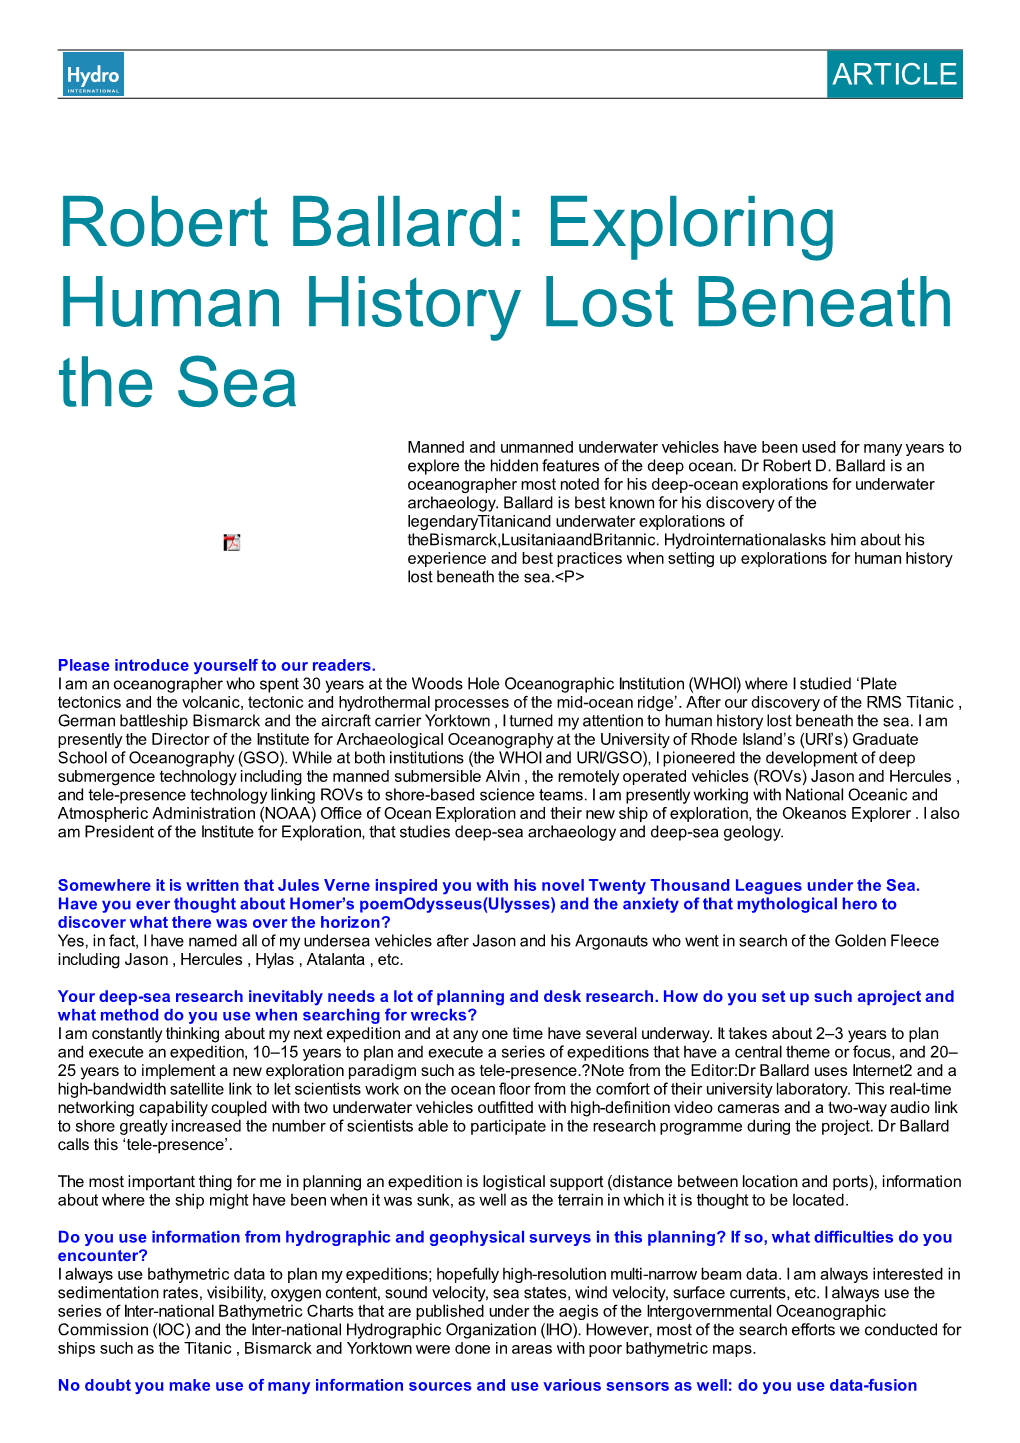 Robert Ballard: Exploring Human History Lost Beneath the Sea